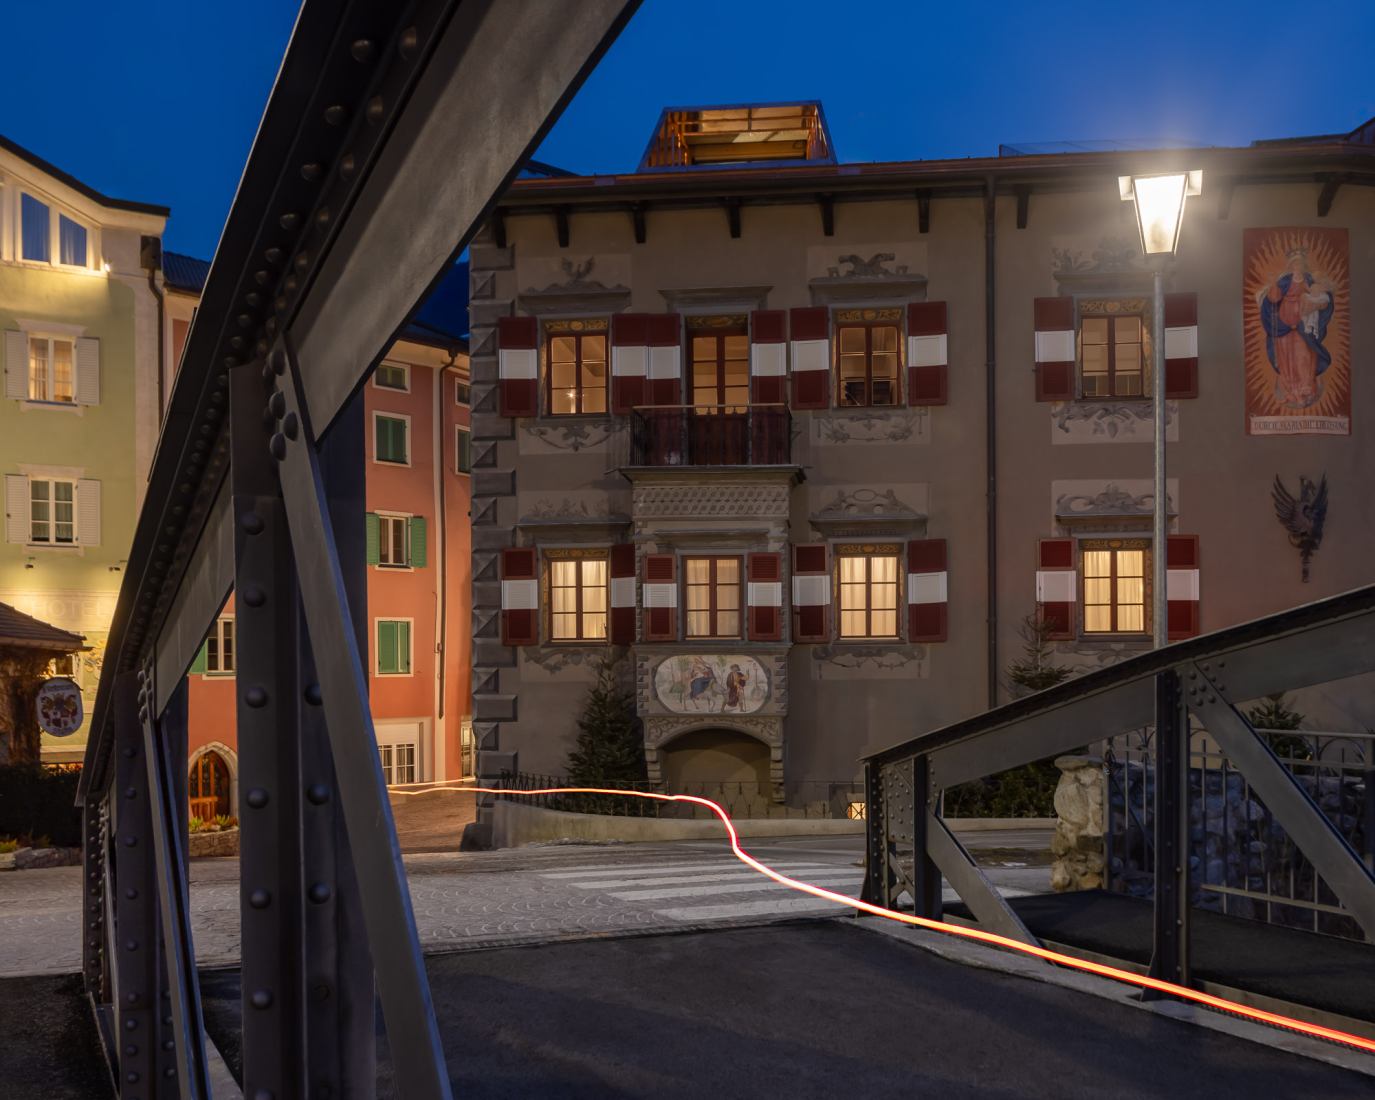 Lasserhaus Art Hotel by Vudafieri-Saverino Partners. Photograph by Paolo Valentini.